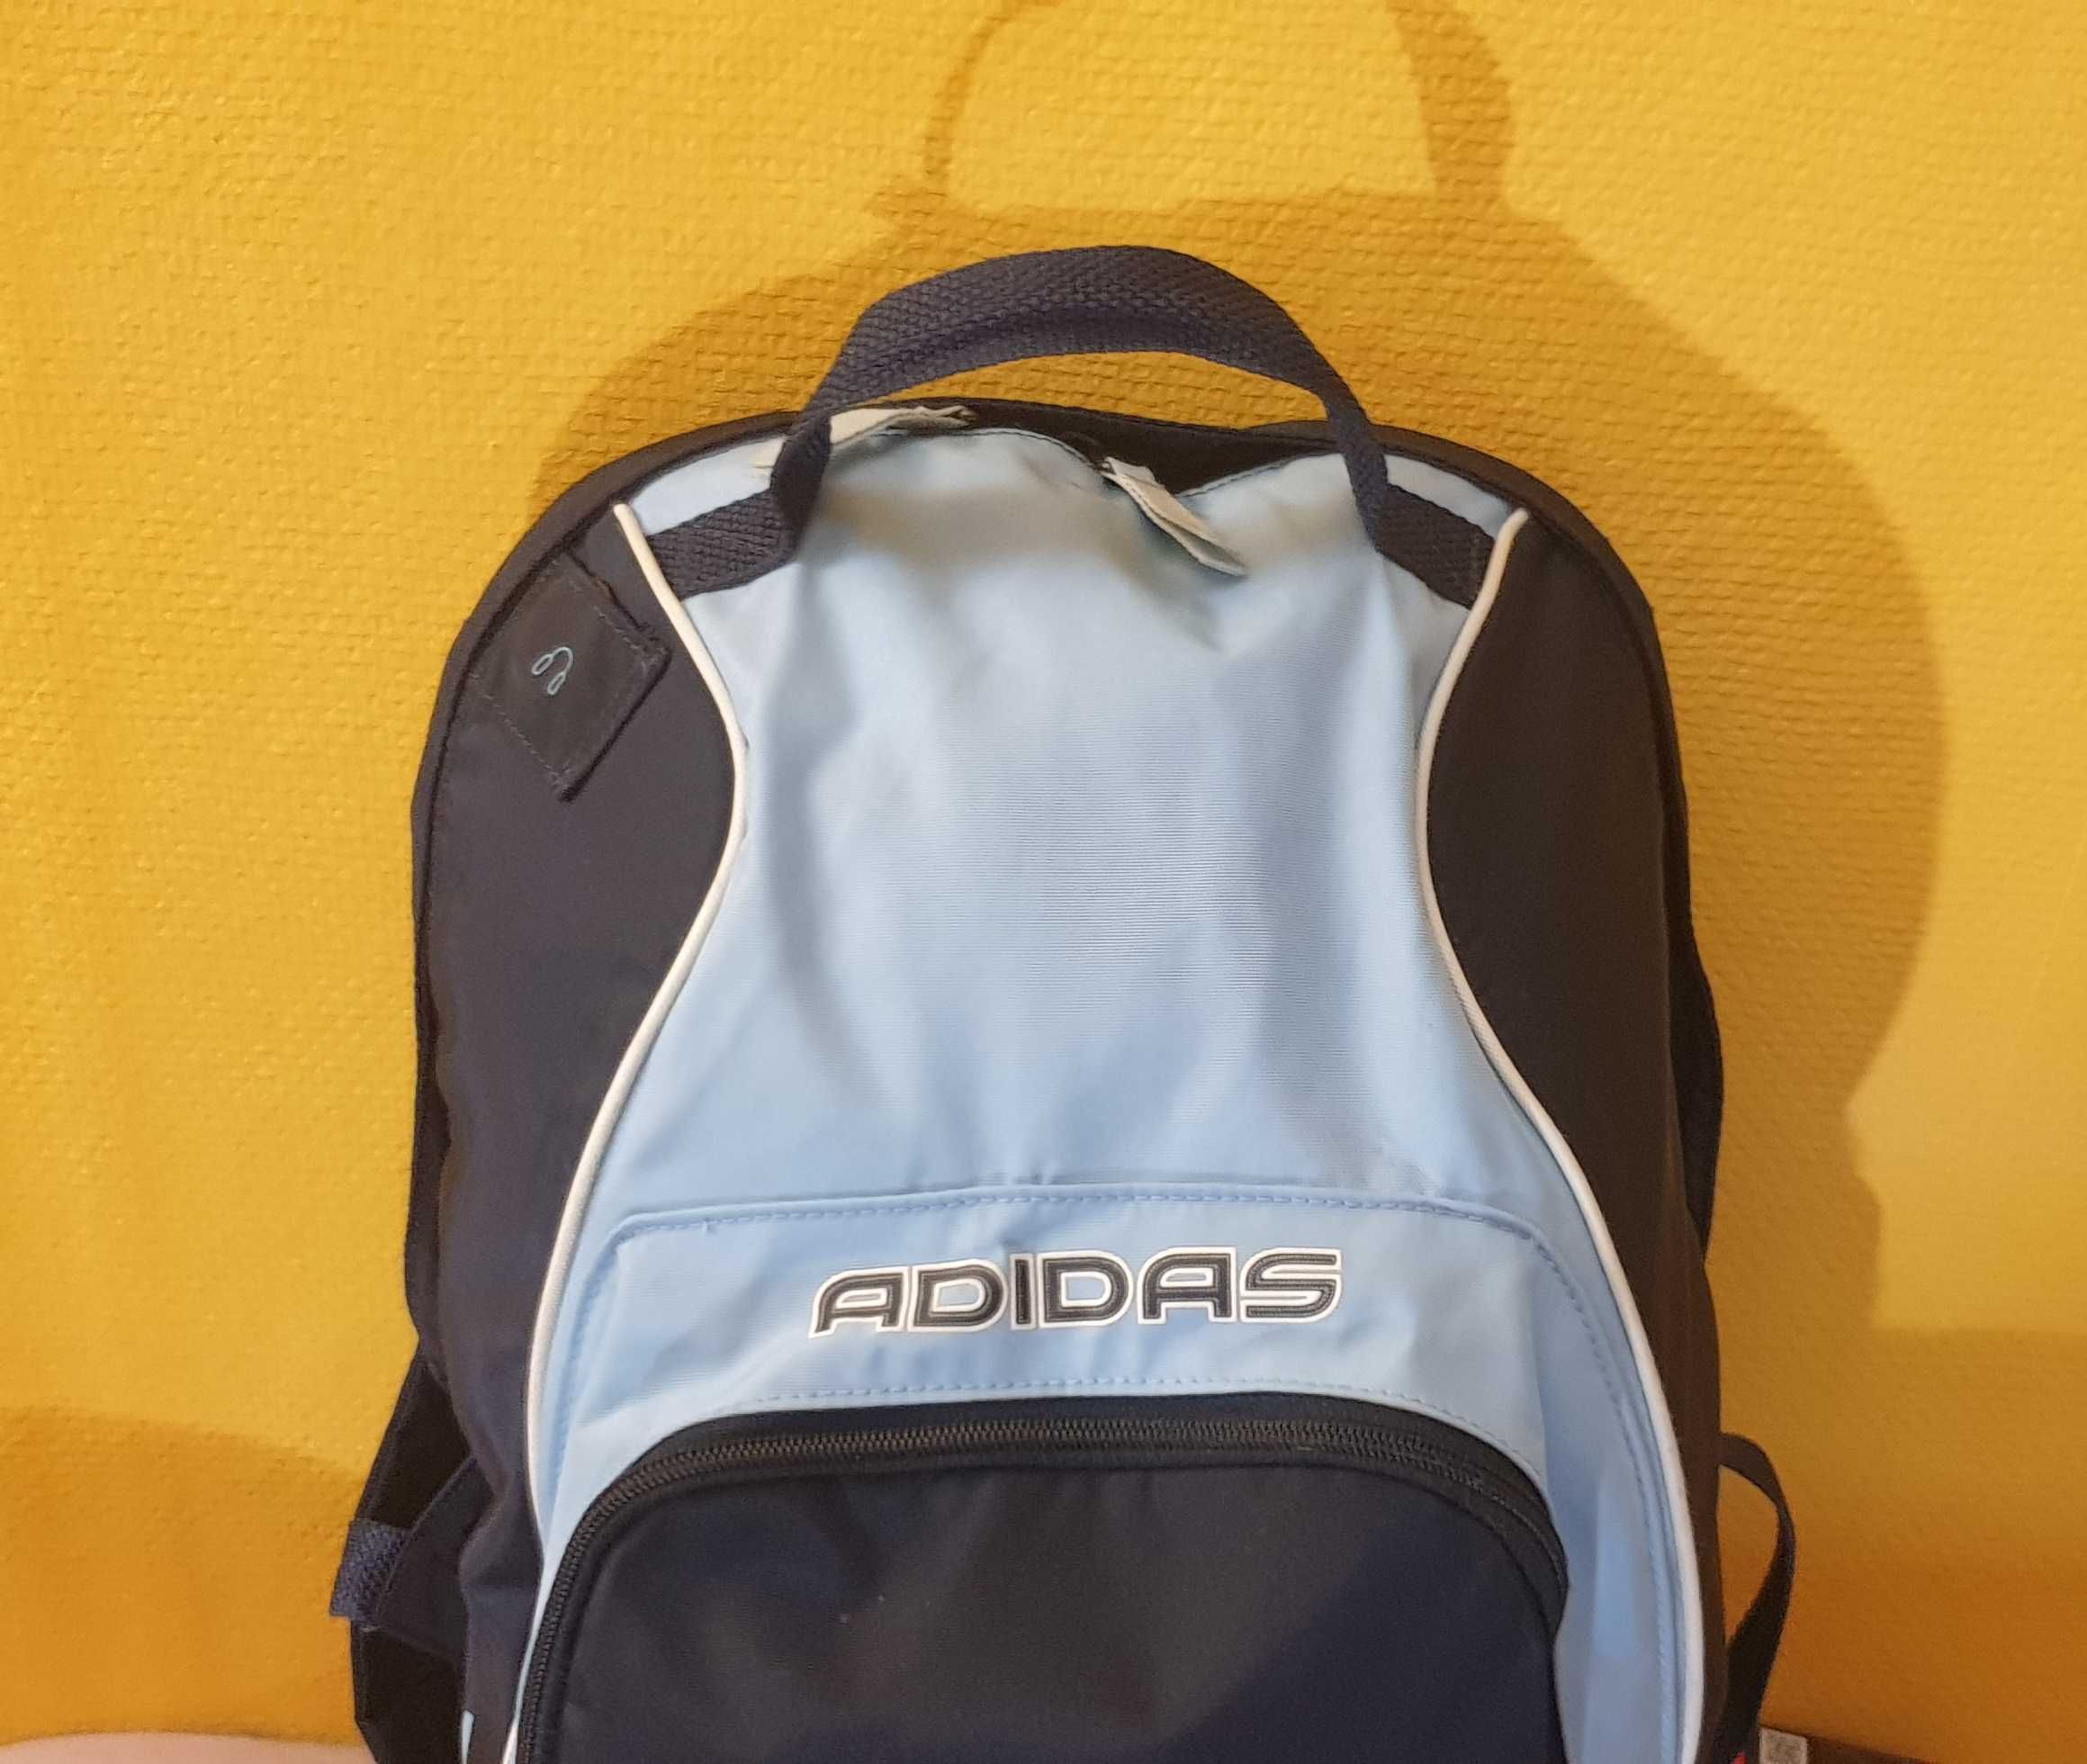 Oryginalny plecak Adidas